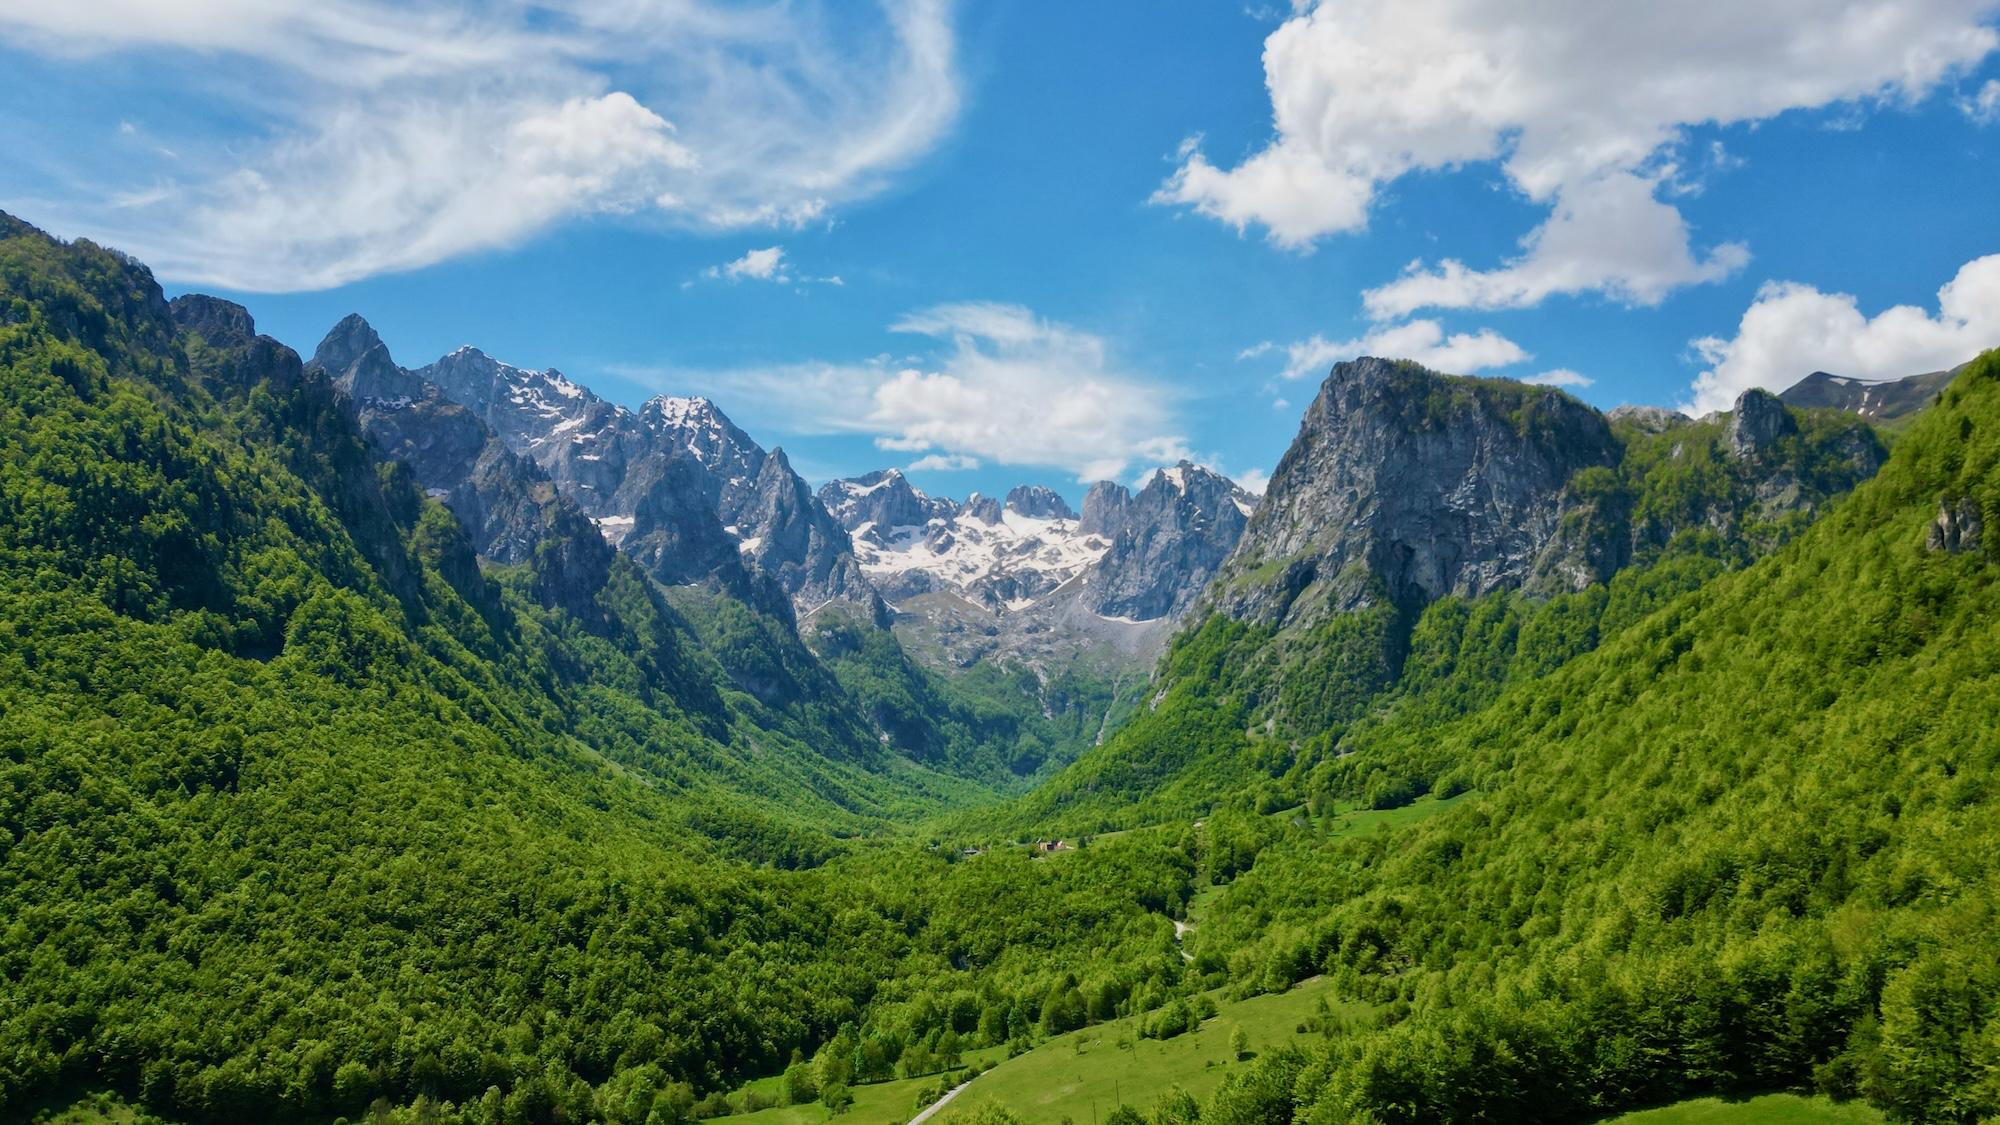 Prokletija National Park Montenegro